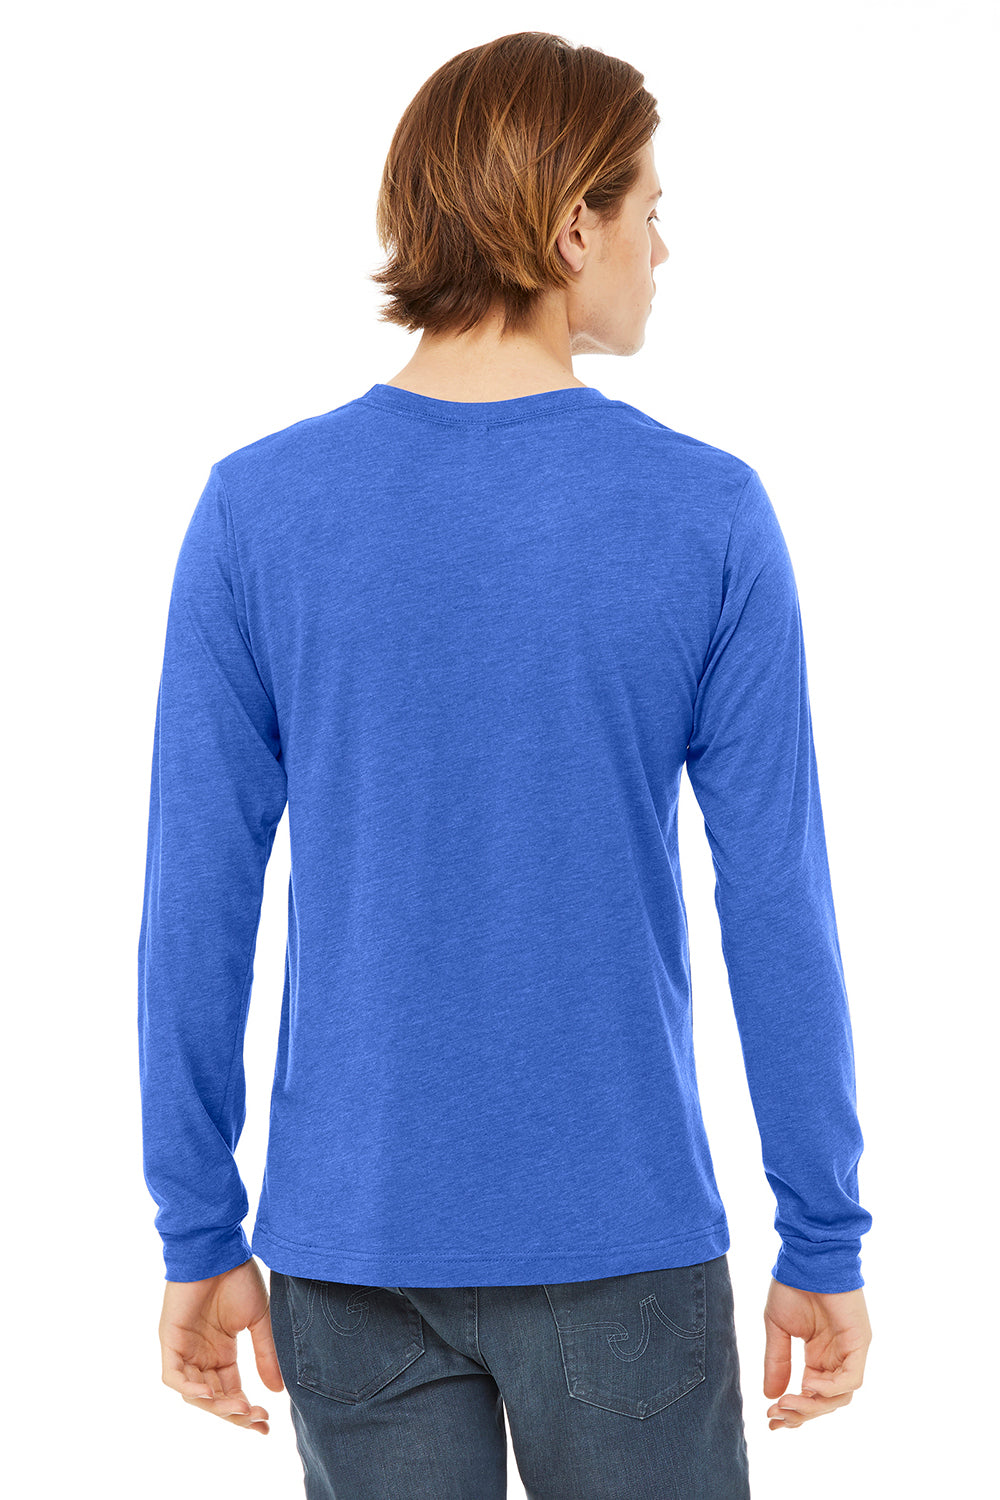 Bella + Canvas BC3501/3501 Mens Jersey Long Sleeve Crewneck T-Shirt True Royal Blue Triblend Model Back